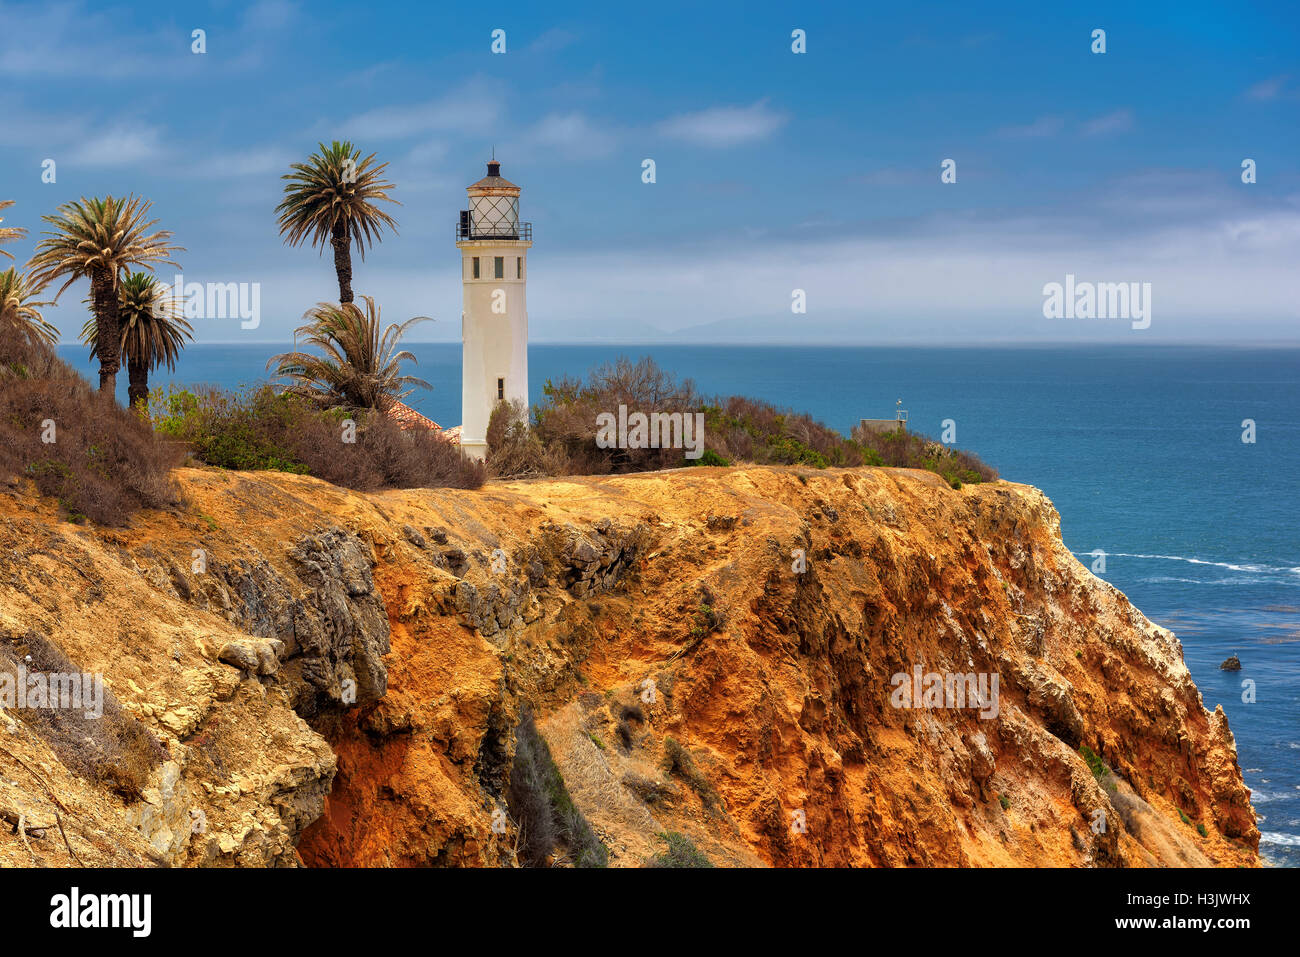 Lighthouse in Los Angeles coast, California. Stock Photo